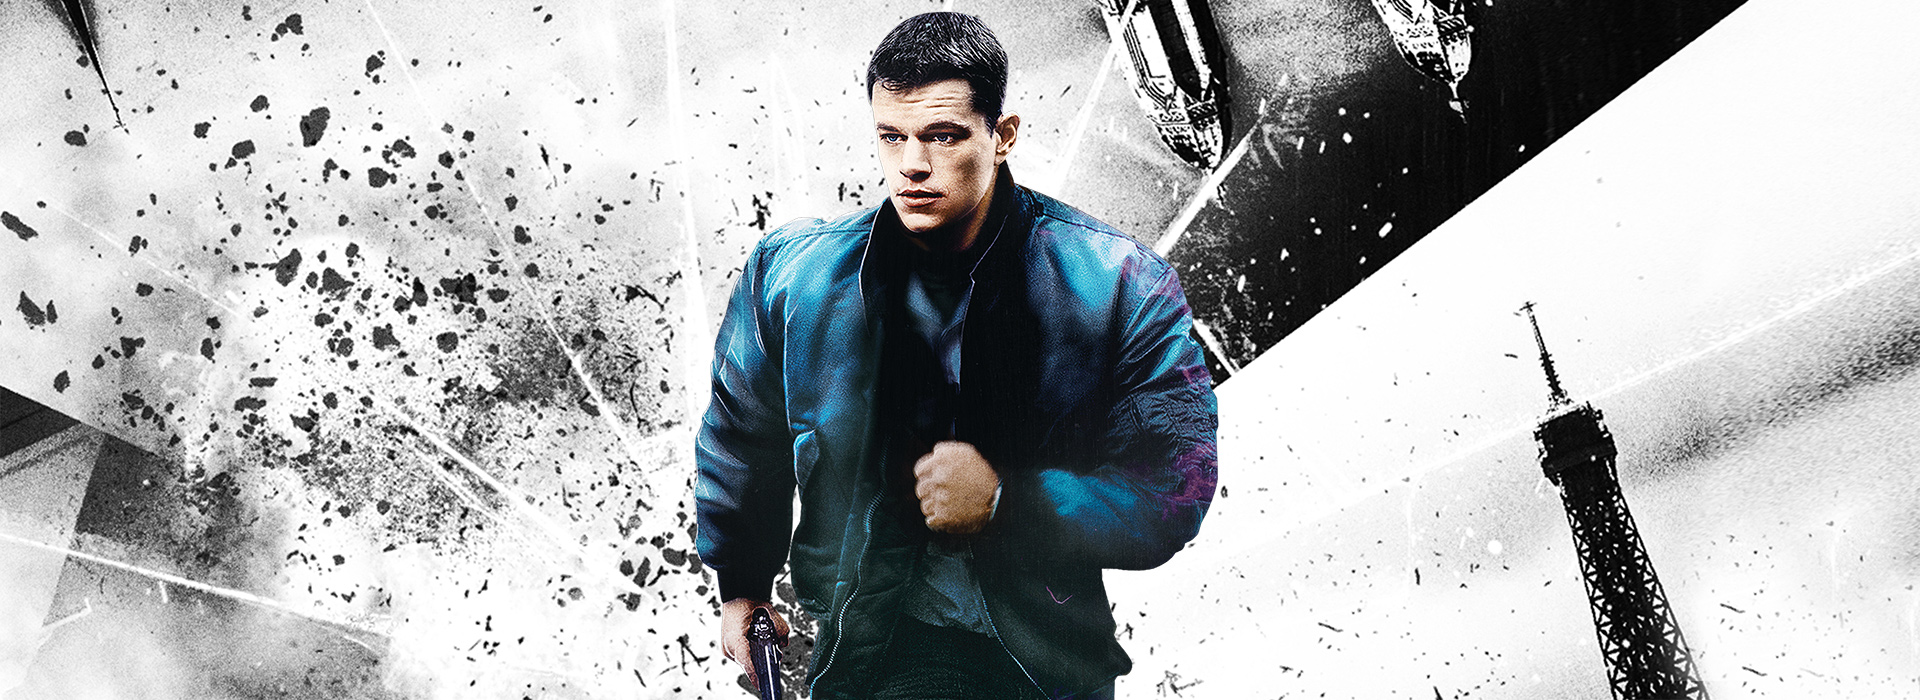 Movie poster The Bourne Identity